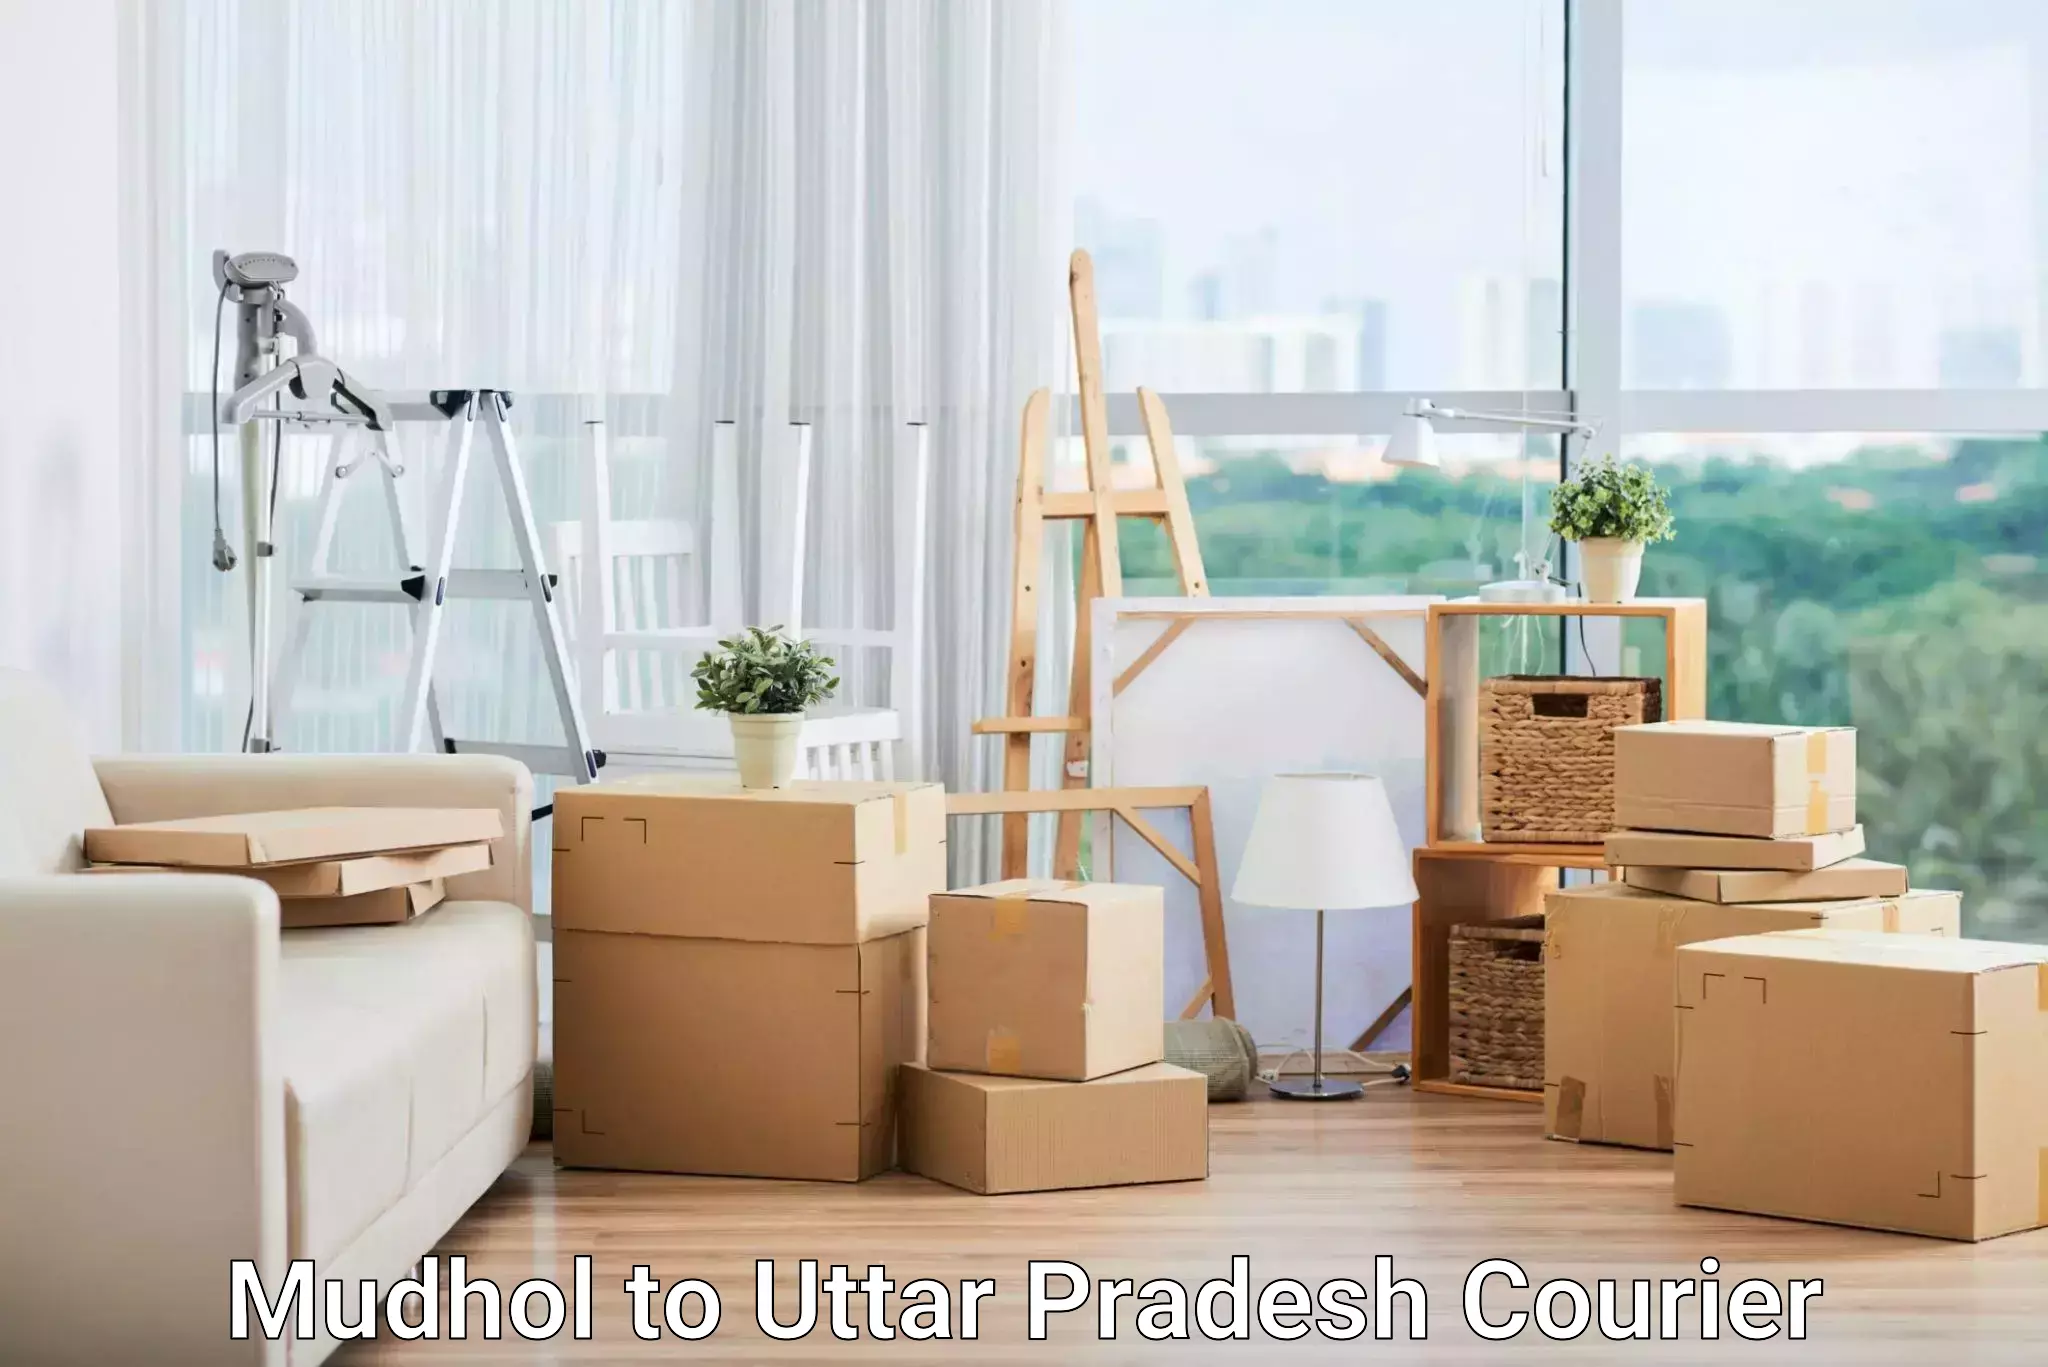 Enhanced tracking features in Mudhol to Uttar Pradesh